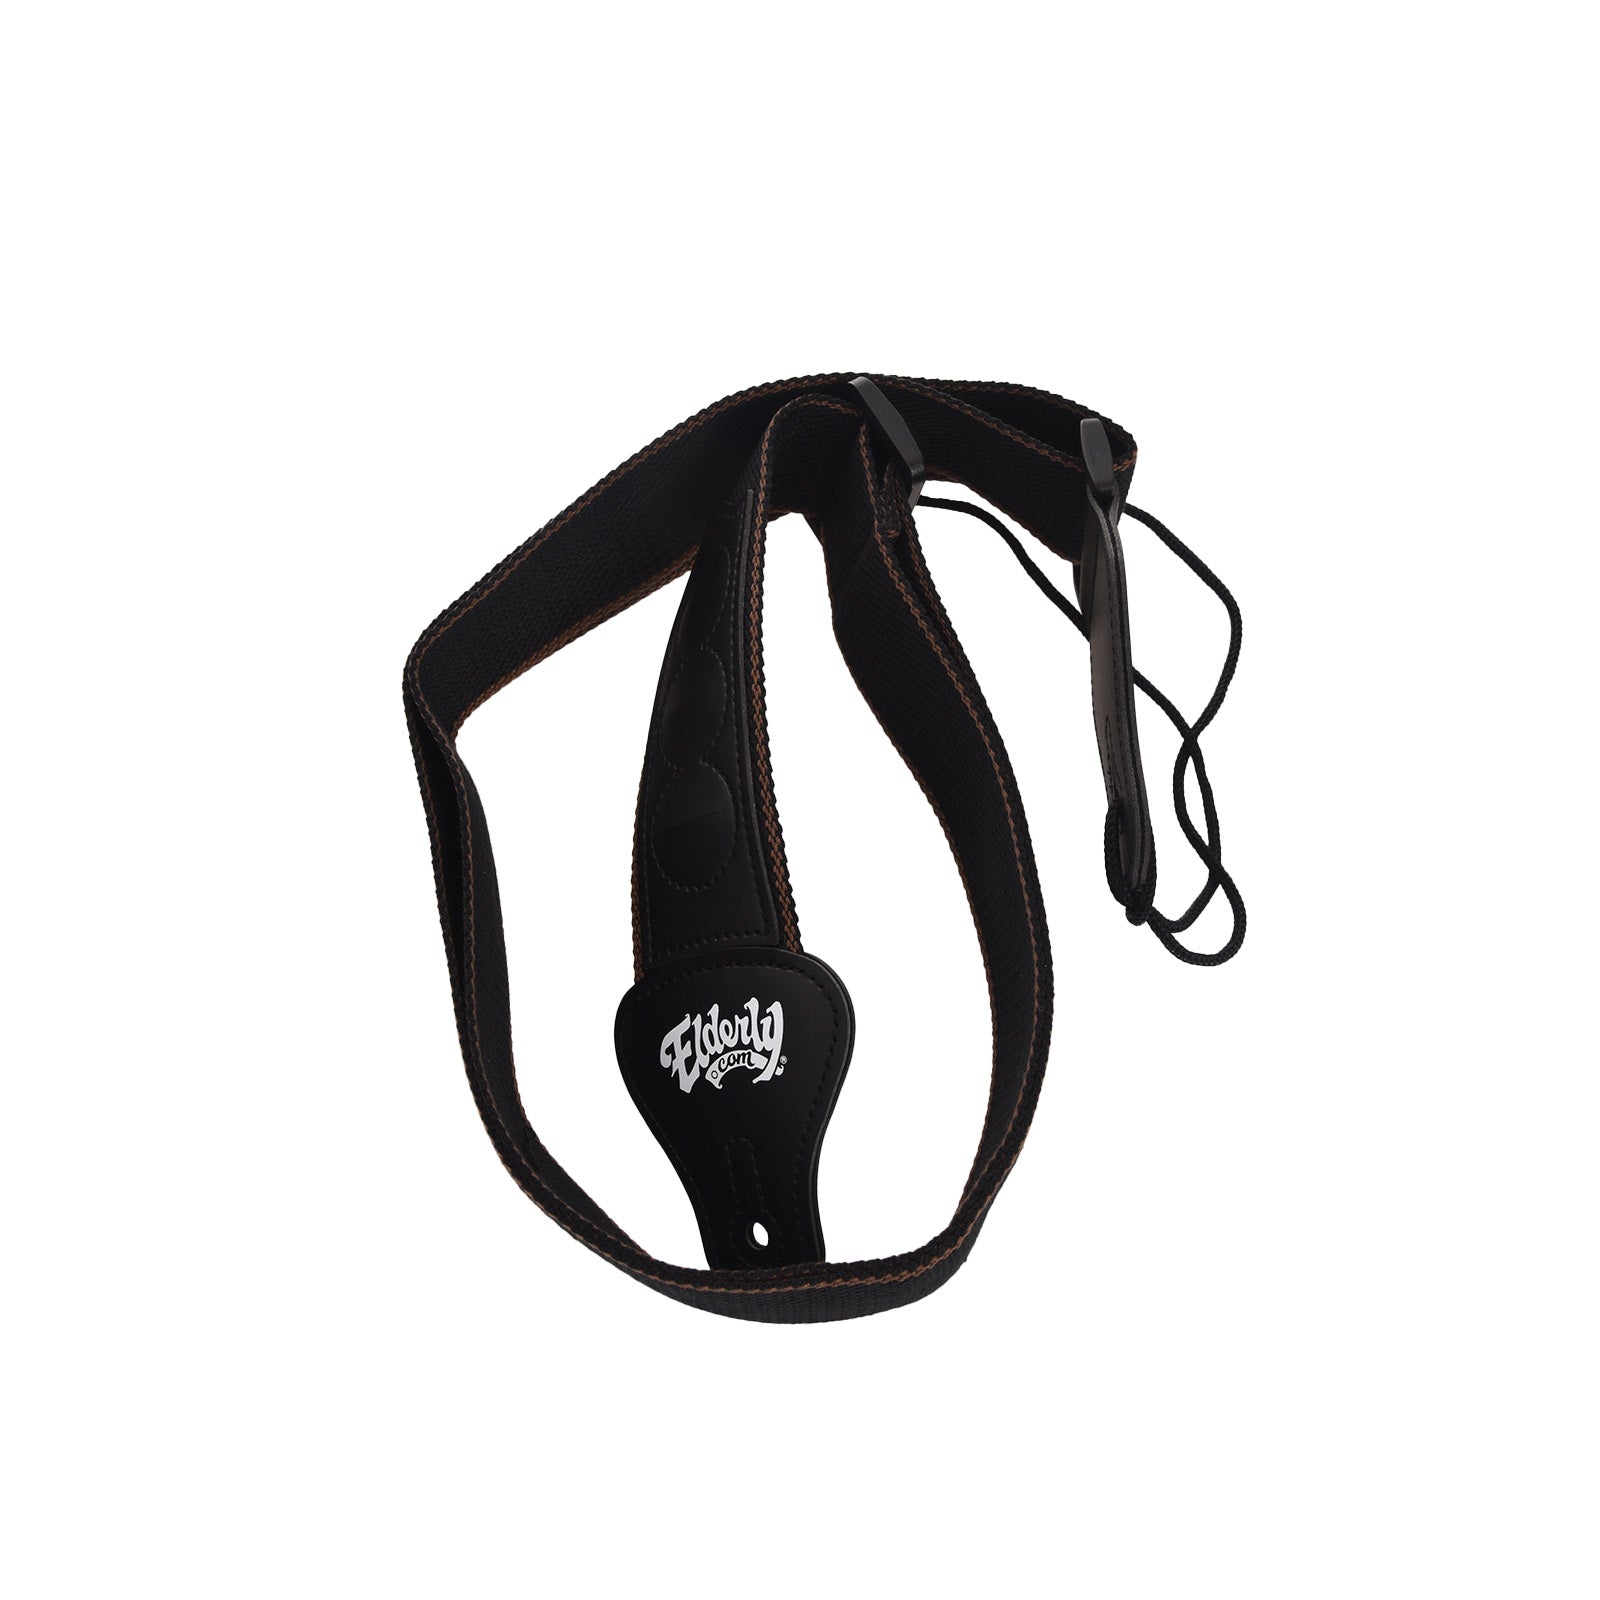 Elderly Logo Cloth Instrument Strap, Black, Coiled